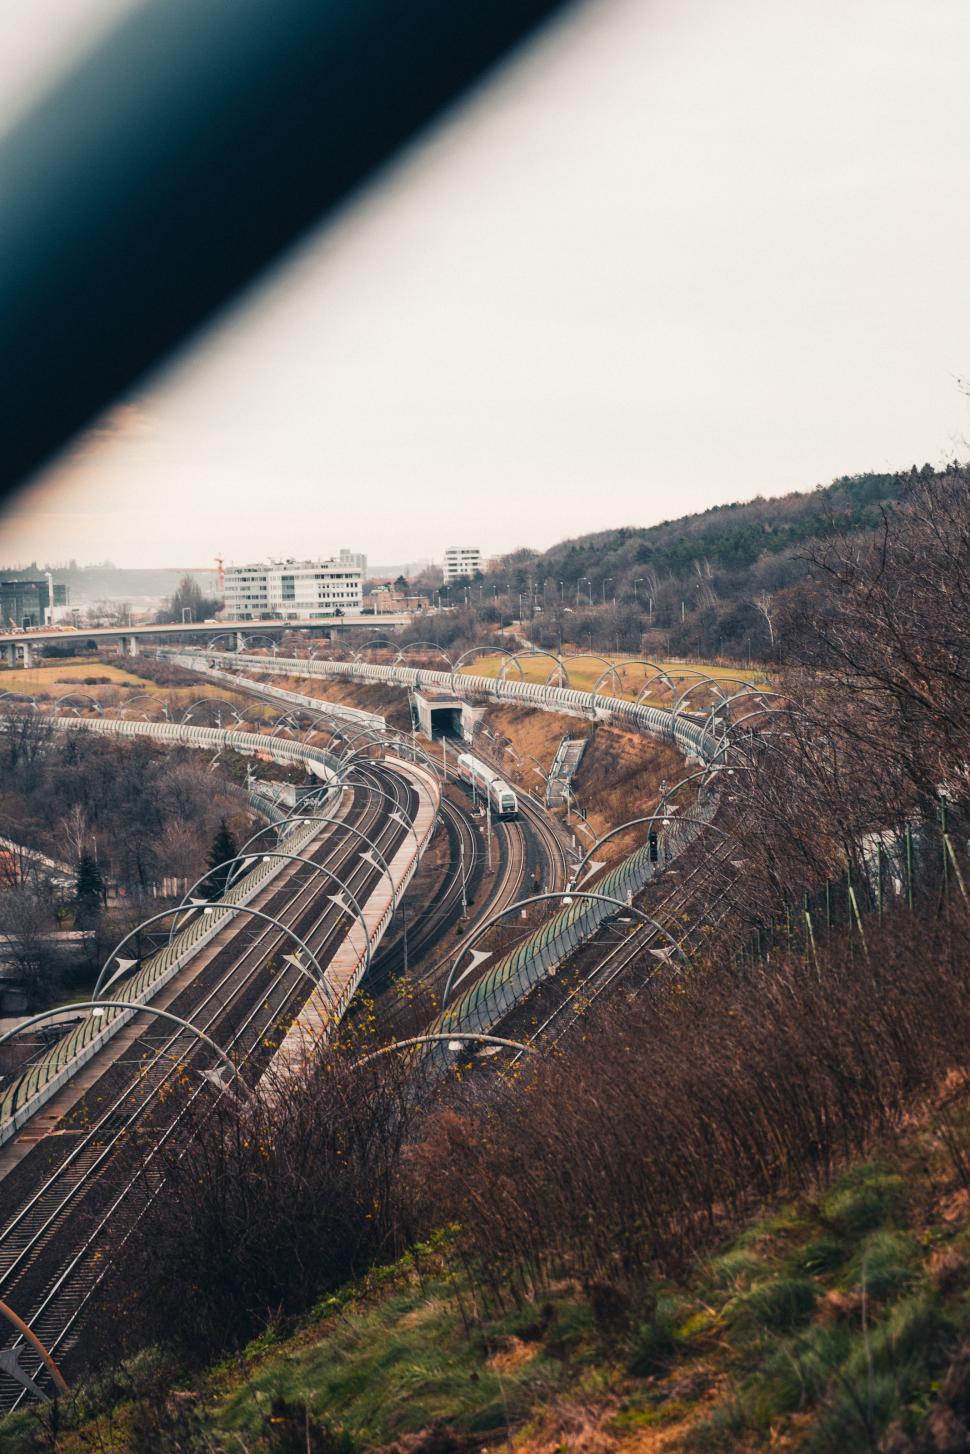 Free Image of Train tracks to Prague city 